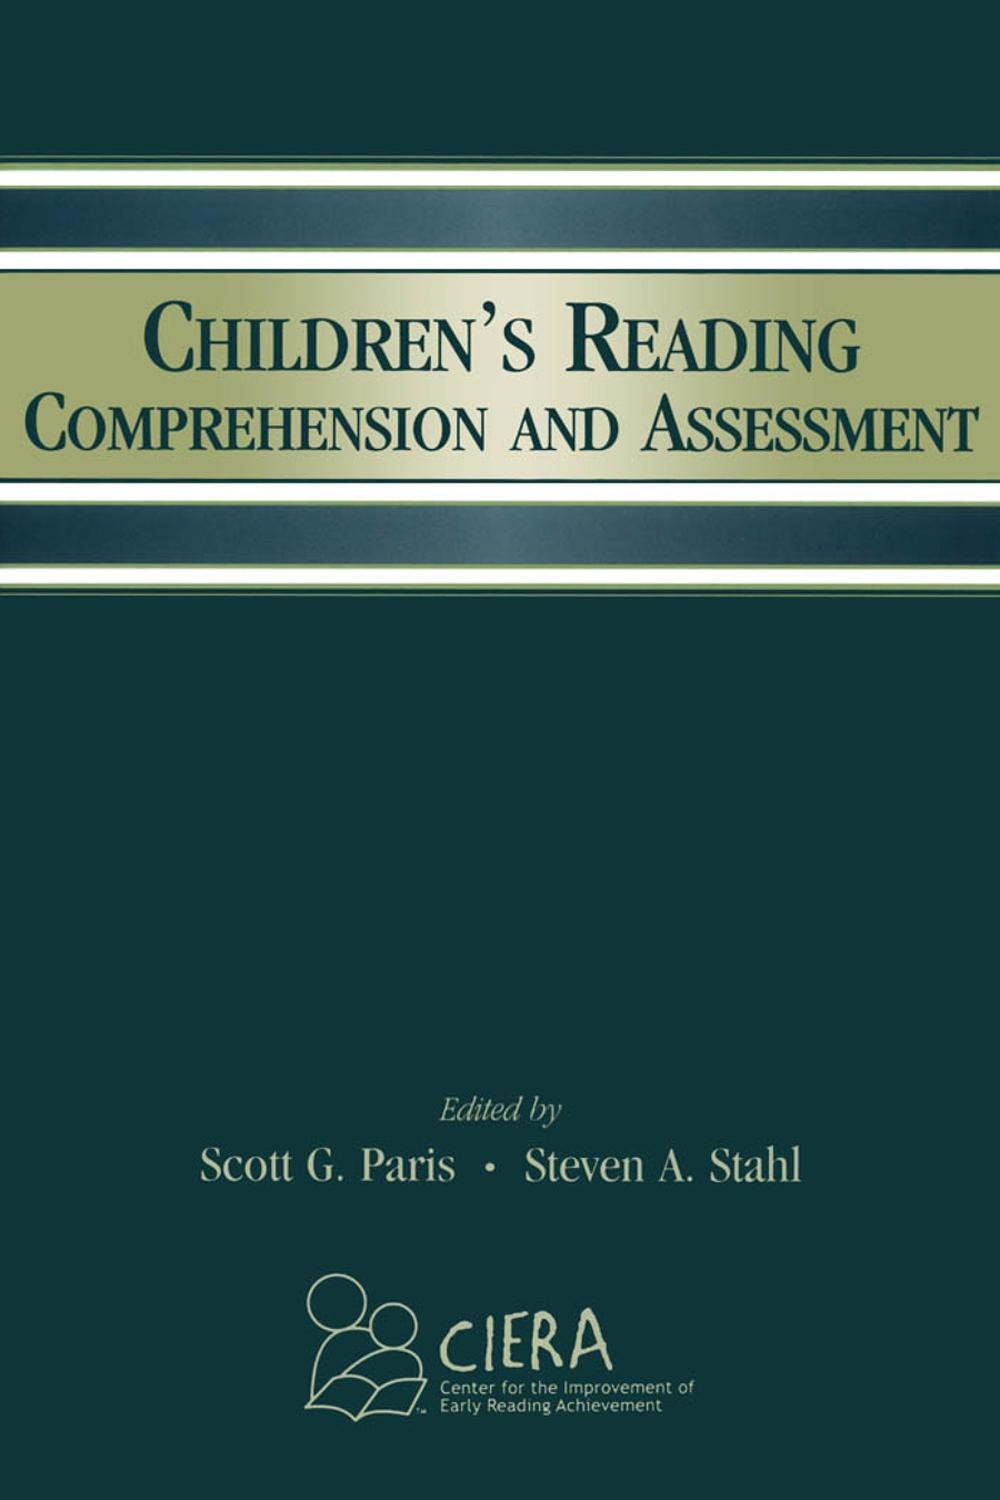 Children's Reading Comprehension and Assessment - Scott G. Paris, Steven A. Stahl